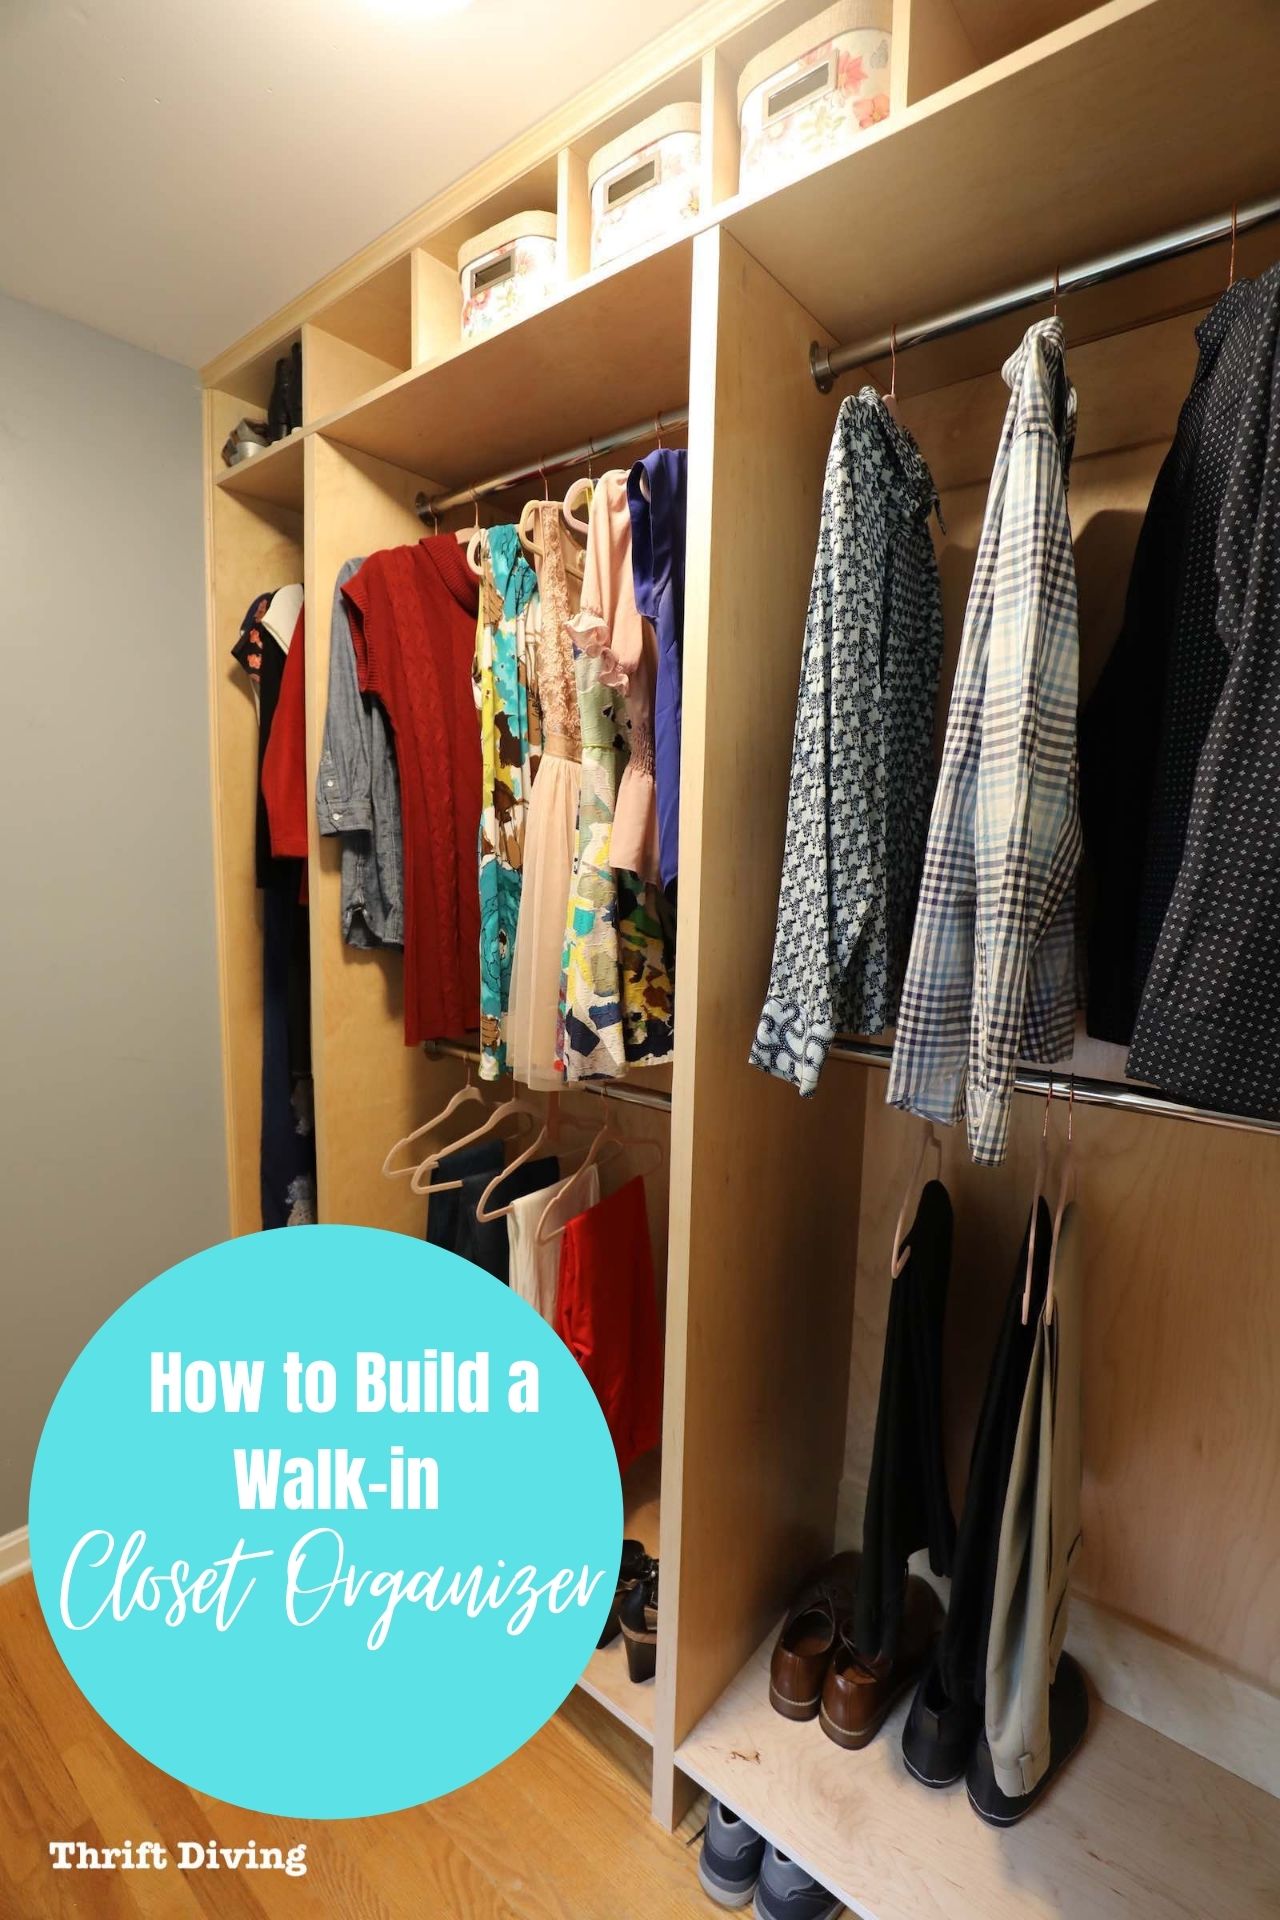 scheuren kunstmest fluctueren How to Build a Walk-in Closet Organizer From Scratch!